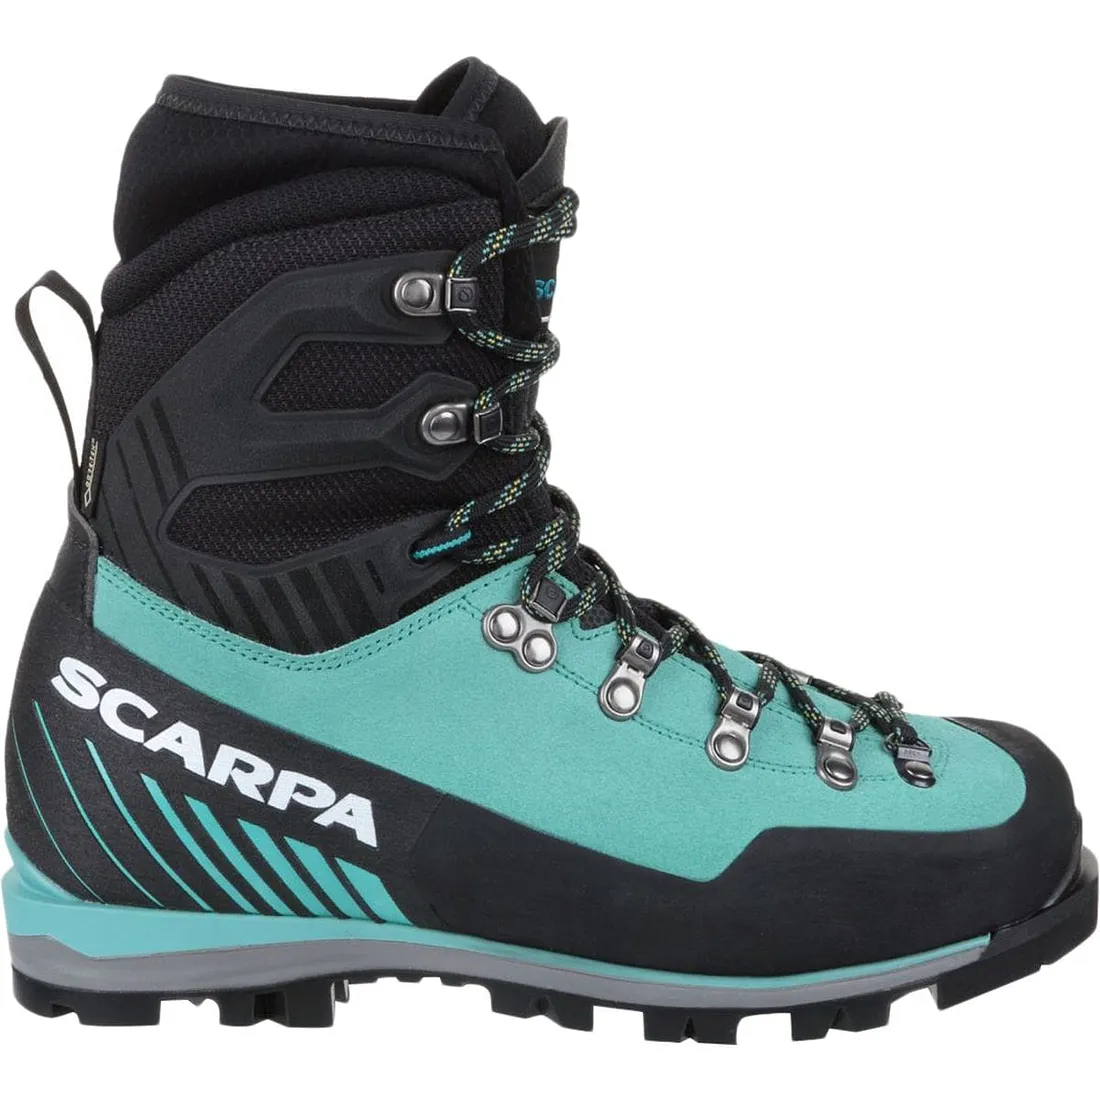 Scarpa Mont Blanc Pro GTX Women's Mountaineering Boots